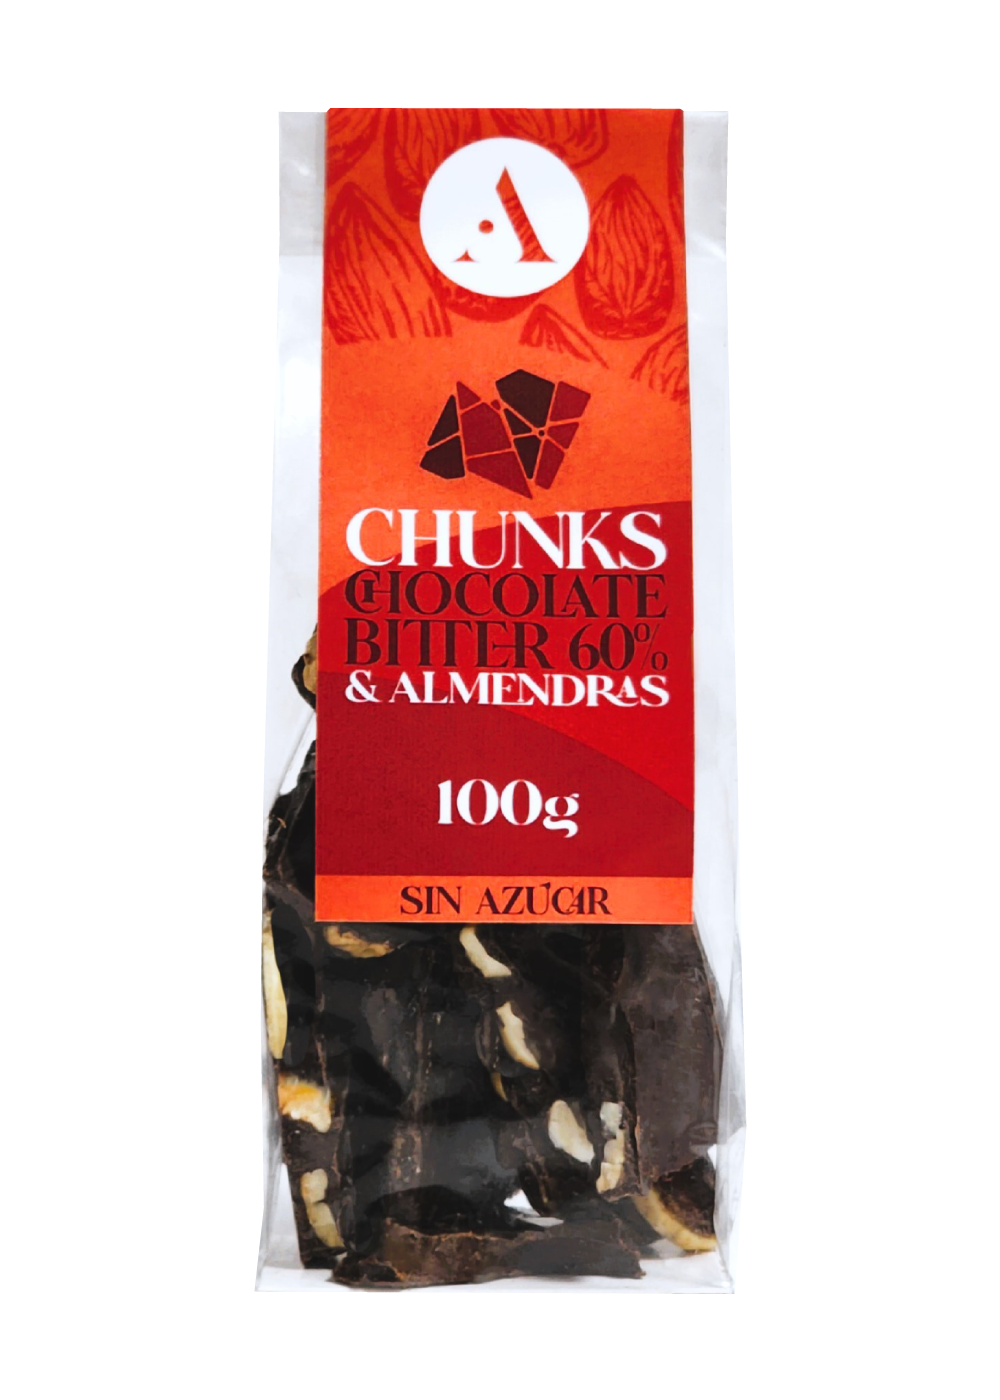 Chunks de Chocolate Bitter 60% y Almendras